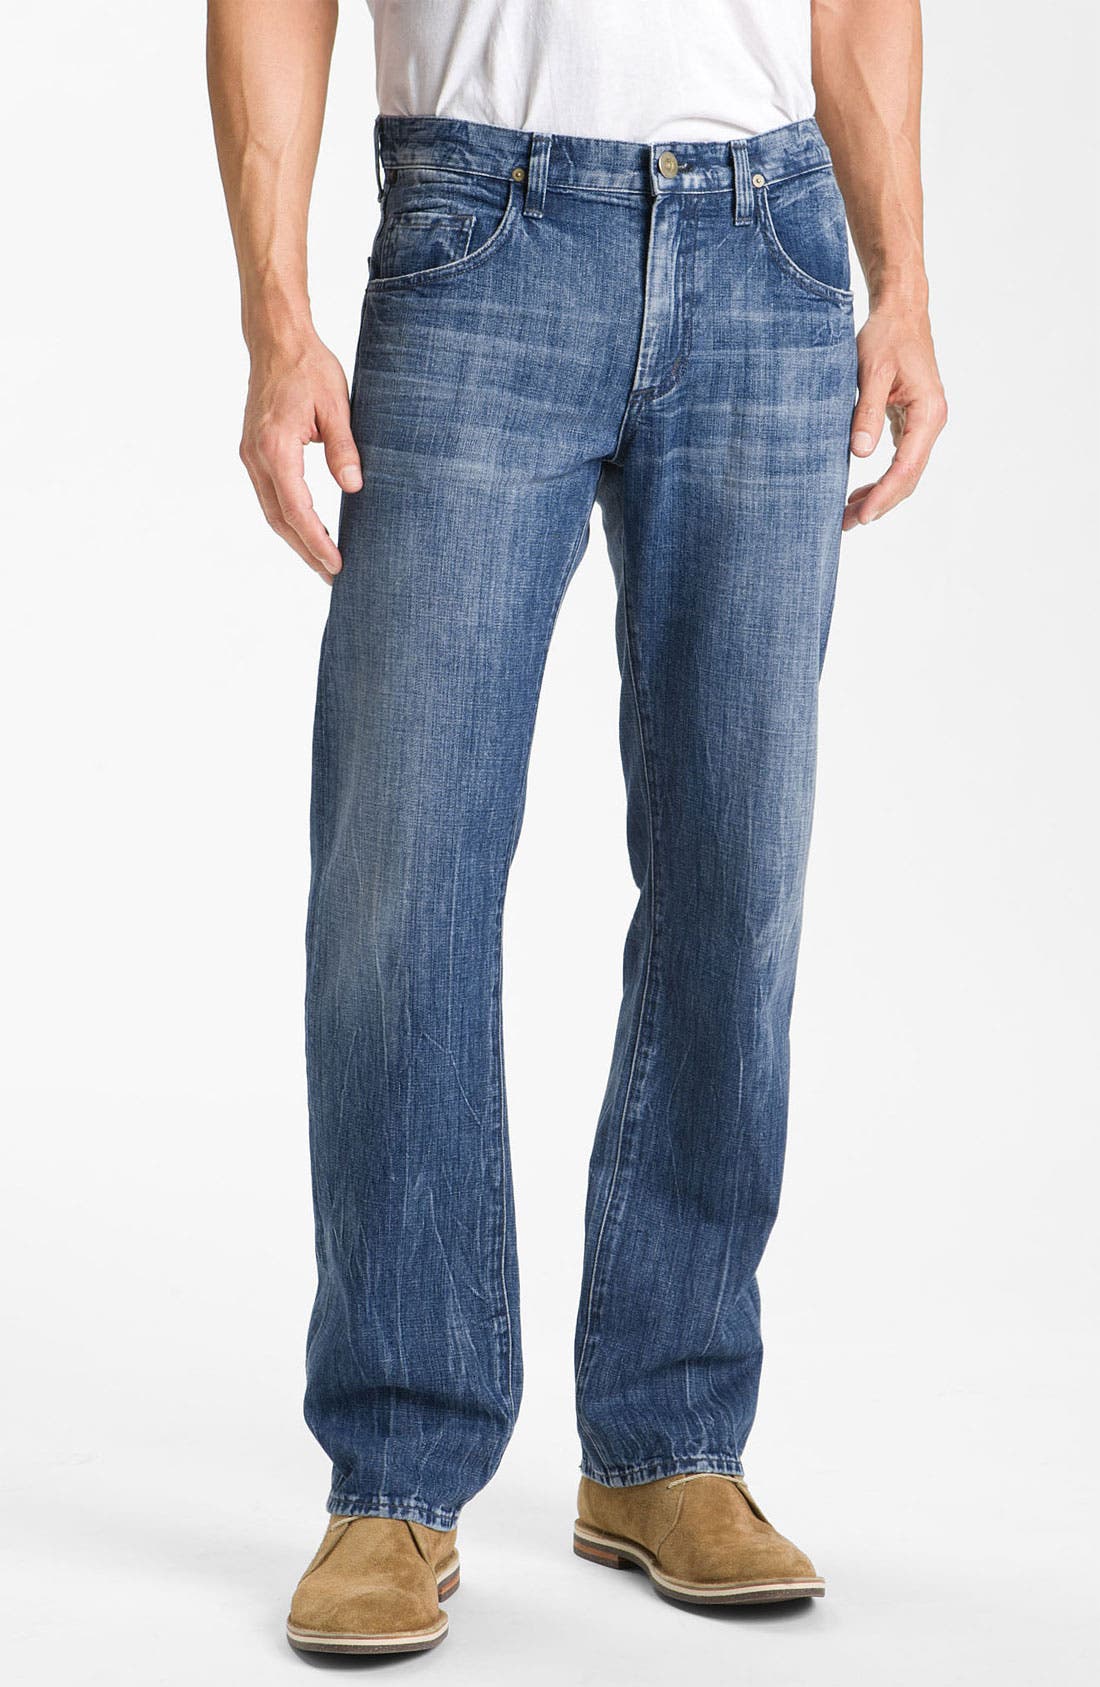 high waisted fringe jeans